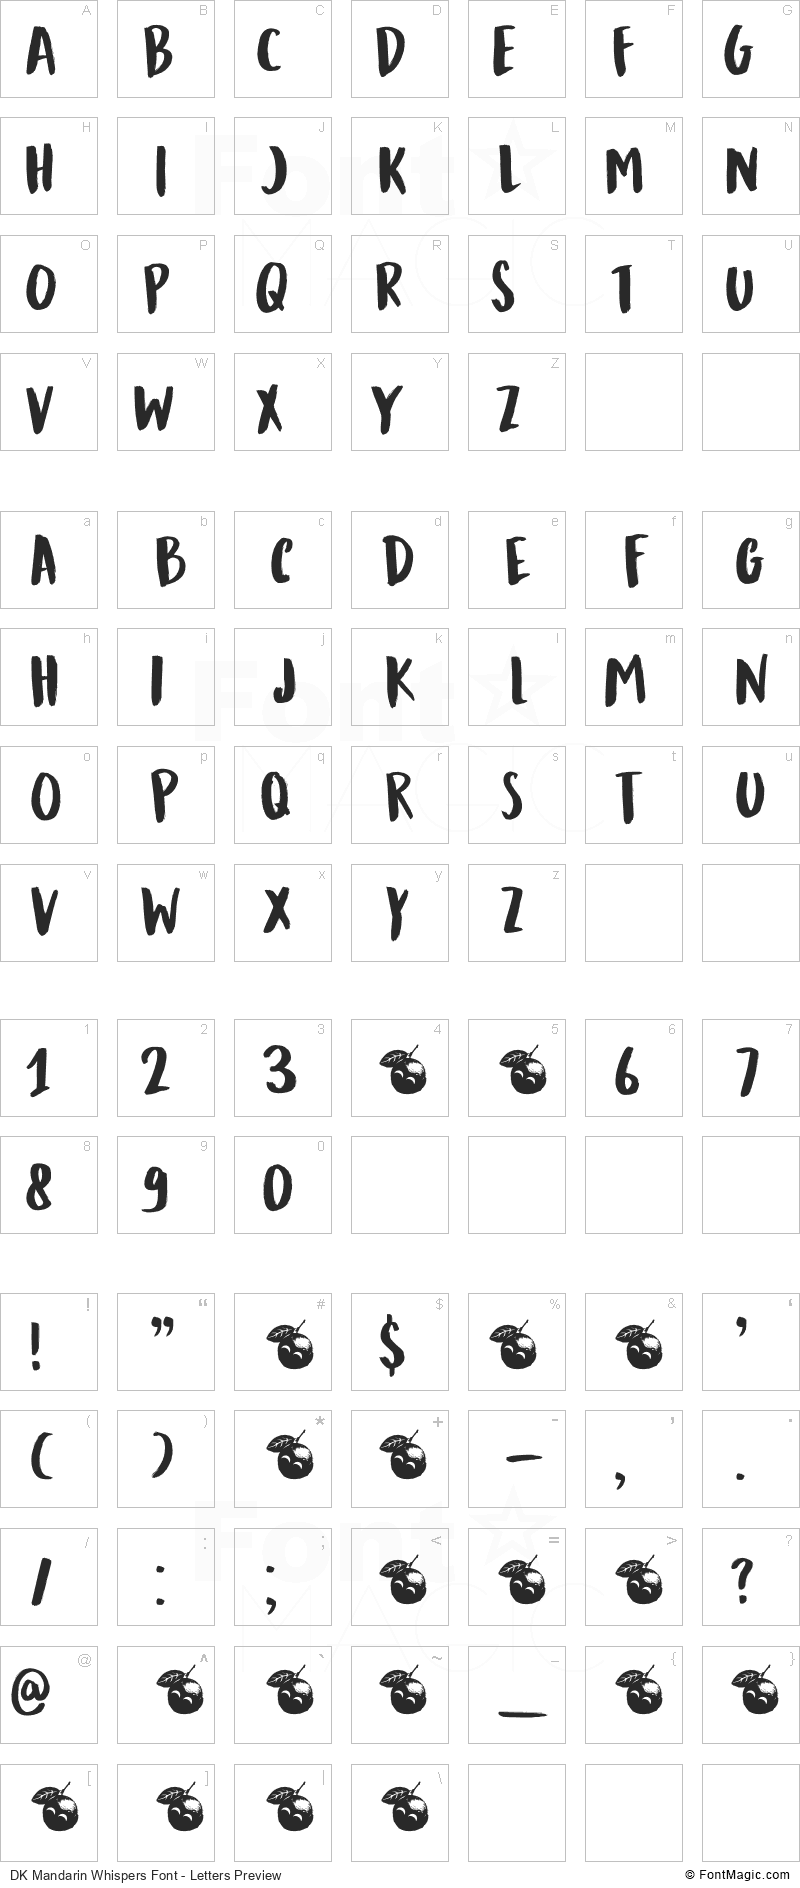 DK Mandarin Whispers Font - All Latters Preview Chart